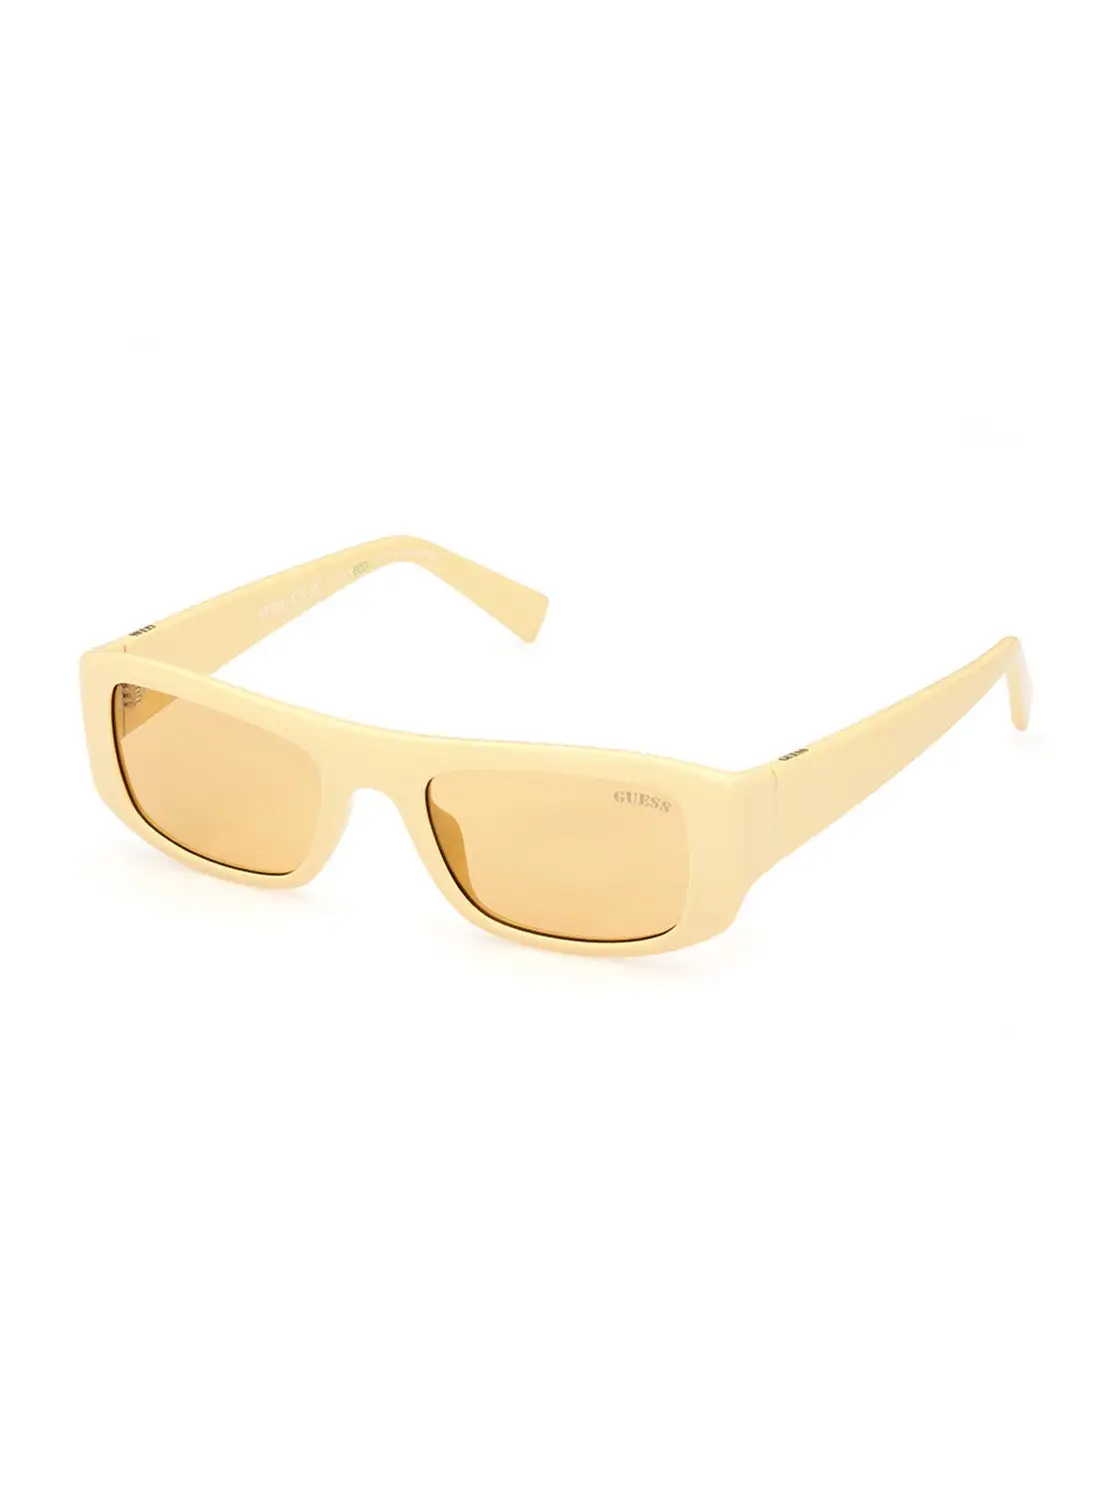 GUESS Unisex UV Protection Rectangular Shape Sunglasses - GU827839G51 - Lens Size: 51 Mm